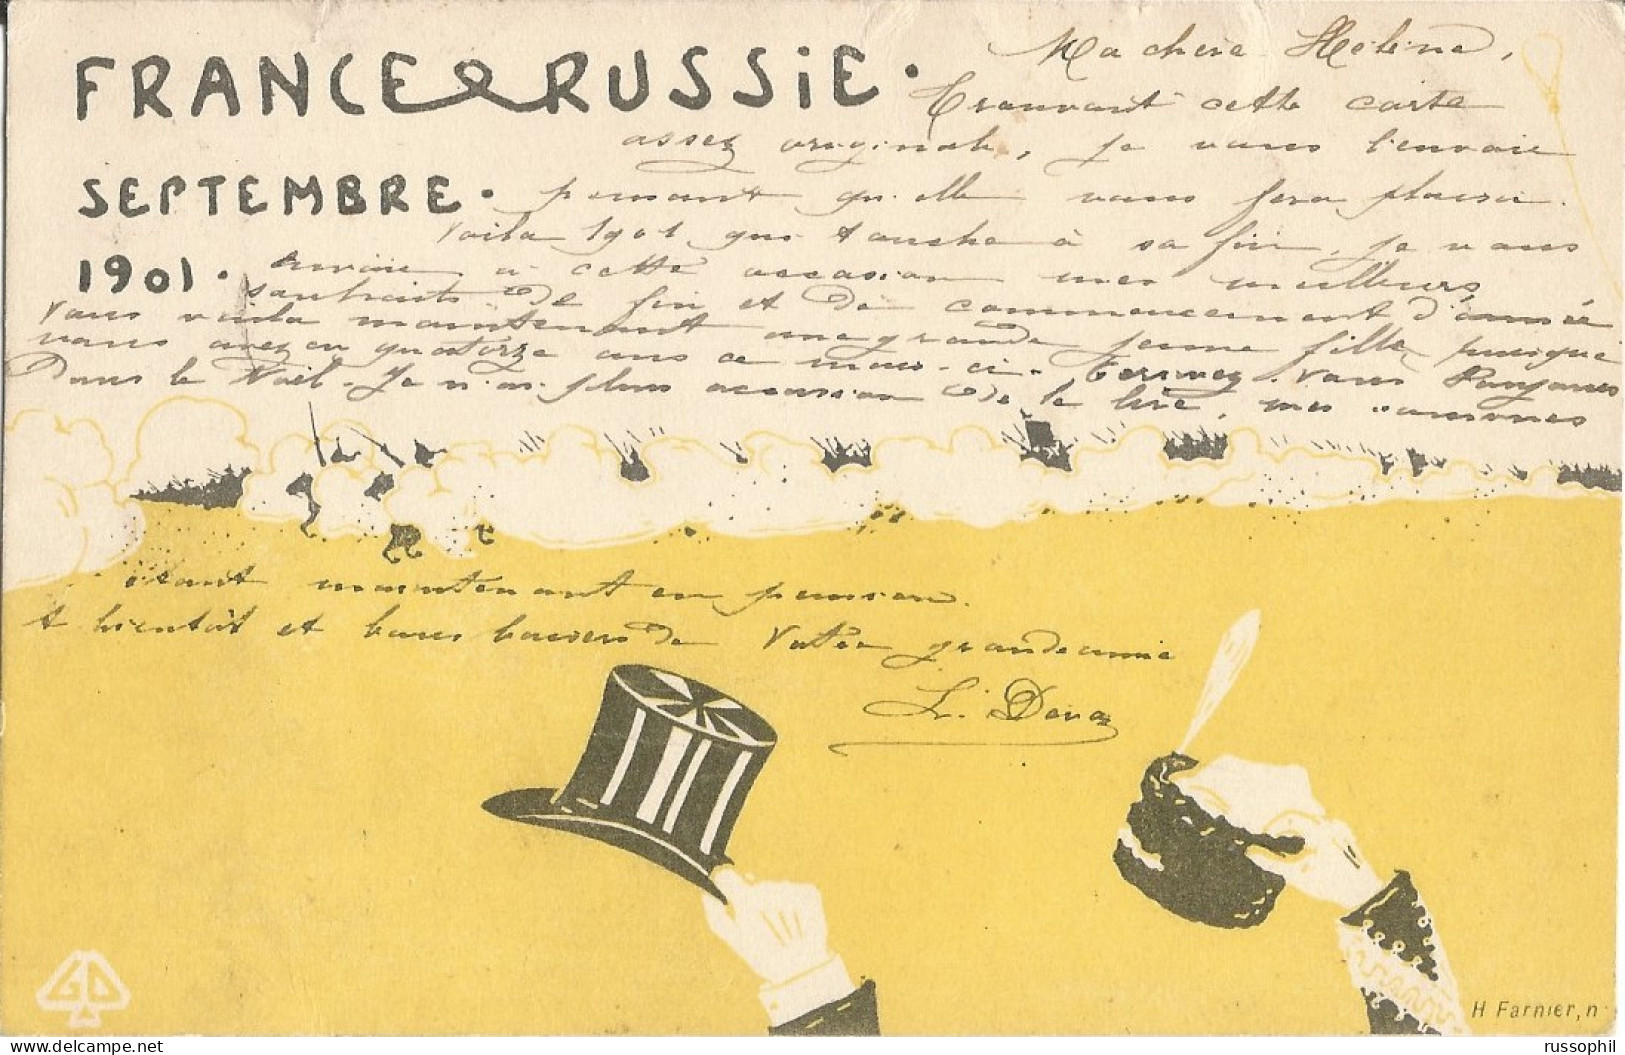 FRANCO RUSSIAN ALLIANCE - FRANCE RUSSIE SEPTEMBRE 1901 - H. FARNIER N° 6 - 1901 - Evenementen